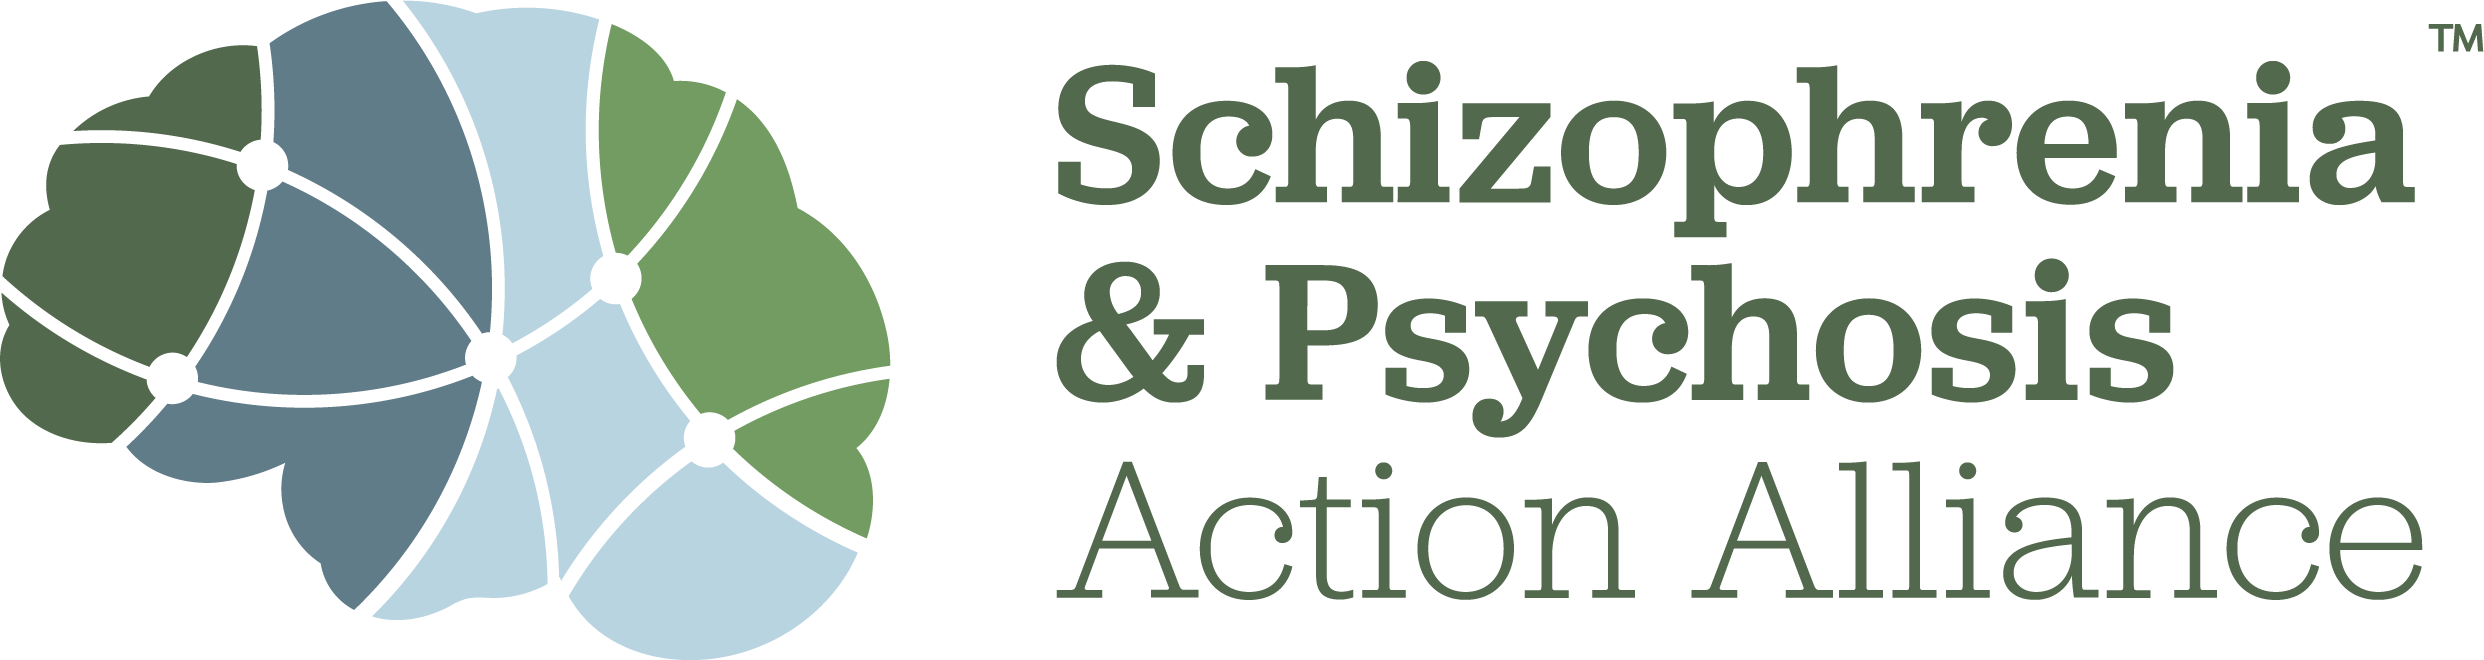 Schizophrenia-and-Psychosis-Action-Alliance_Horizontal_trademark_1